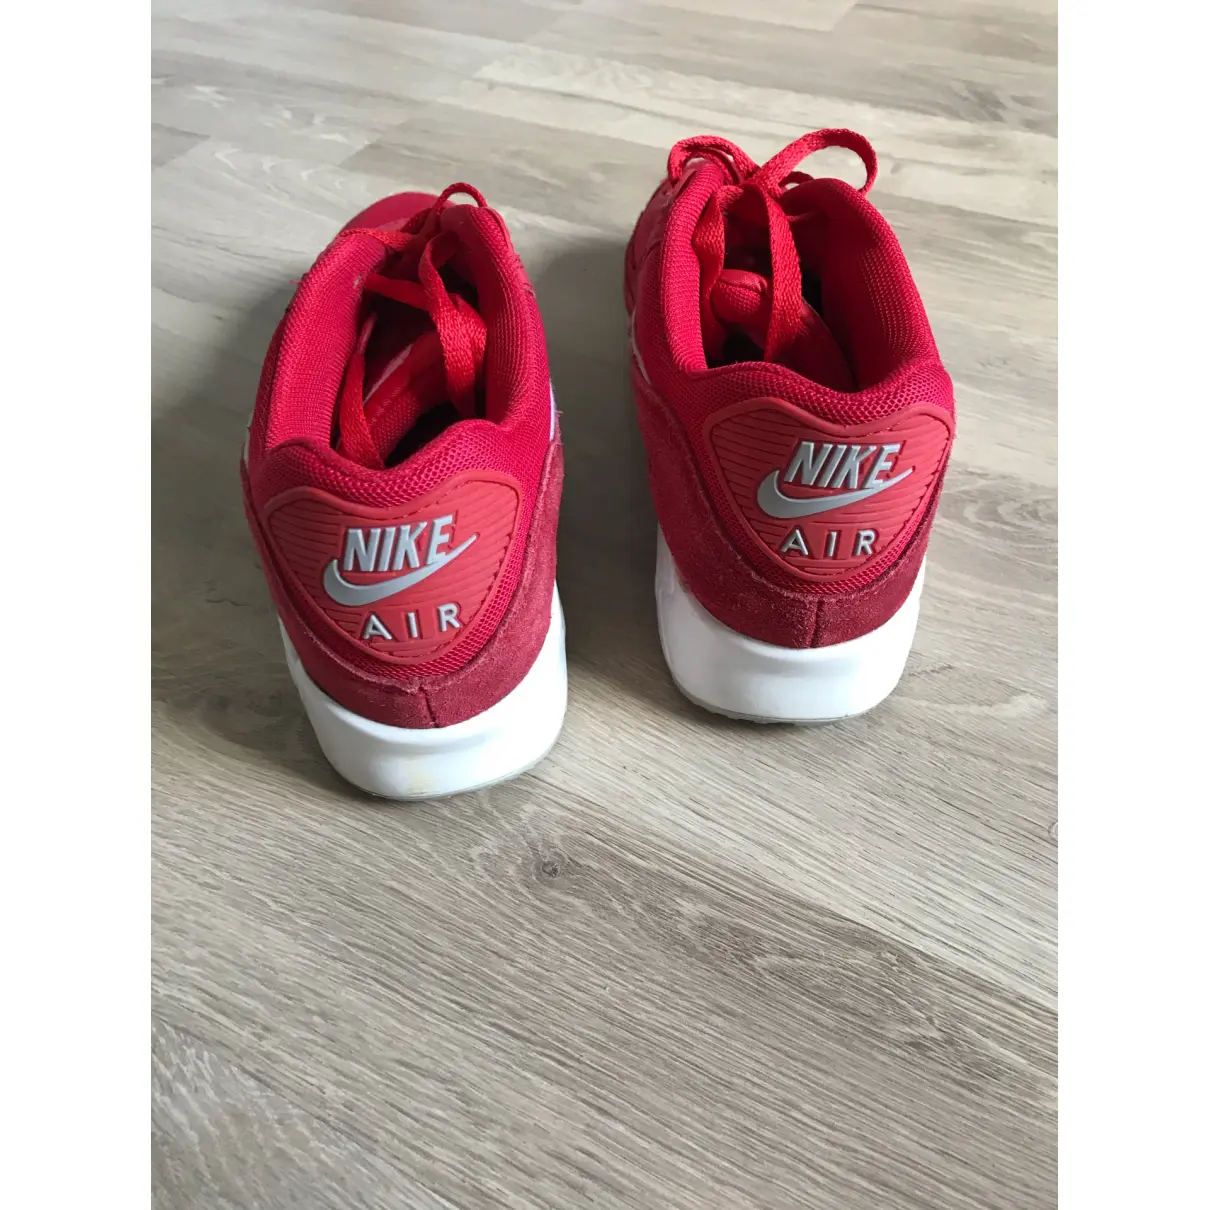 Air Max 90 high trainers Nike